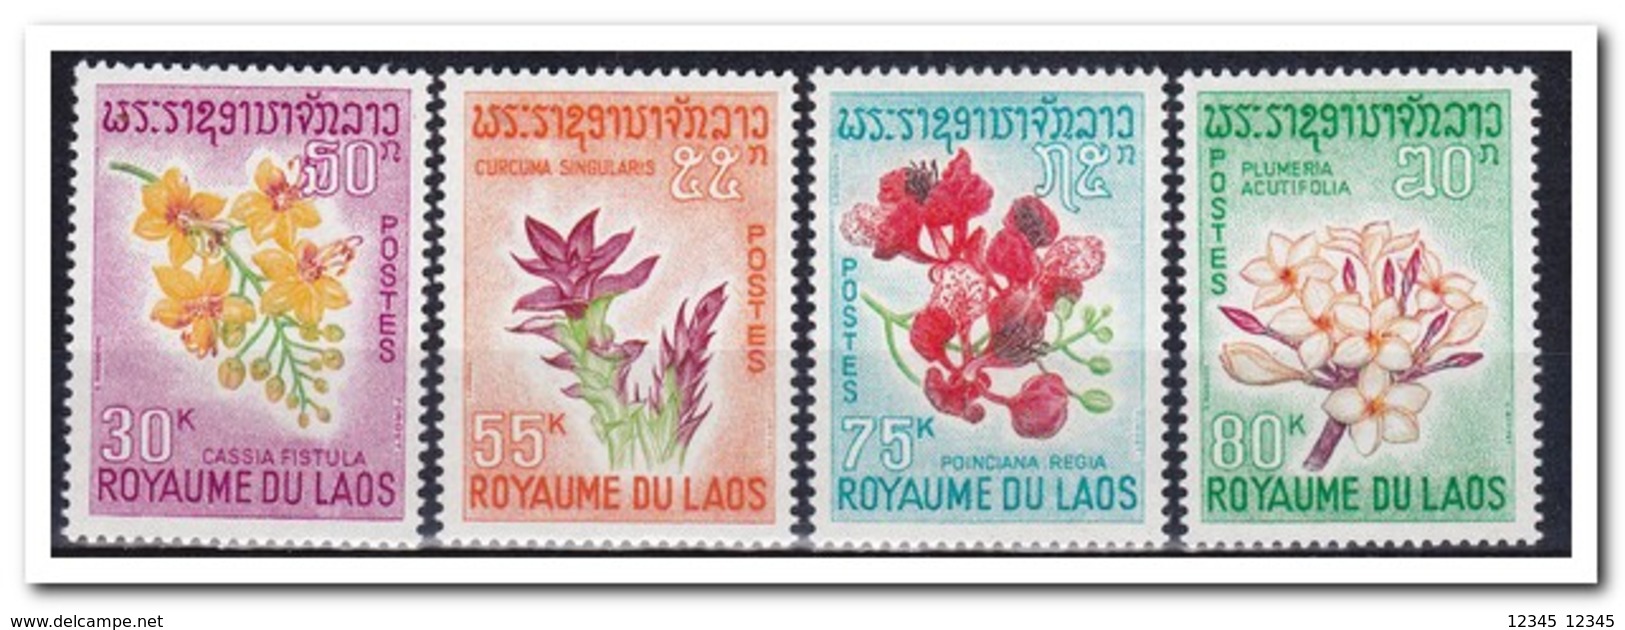 Laos 1967, Postfris MNH, Flowers - Laos